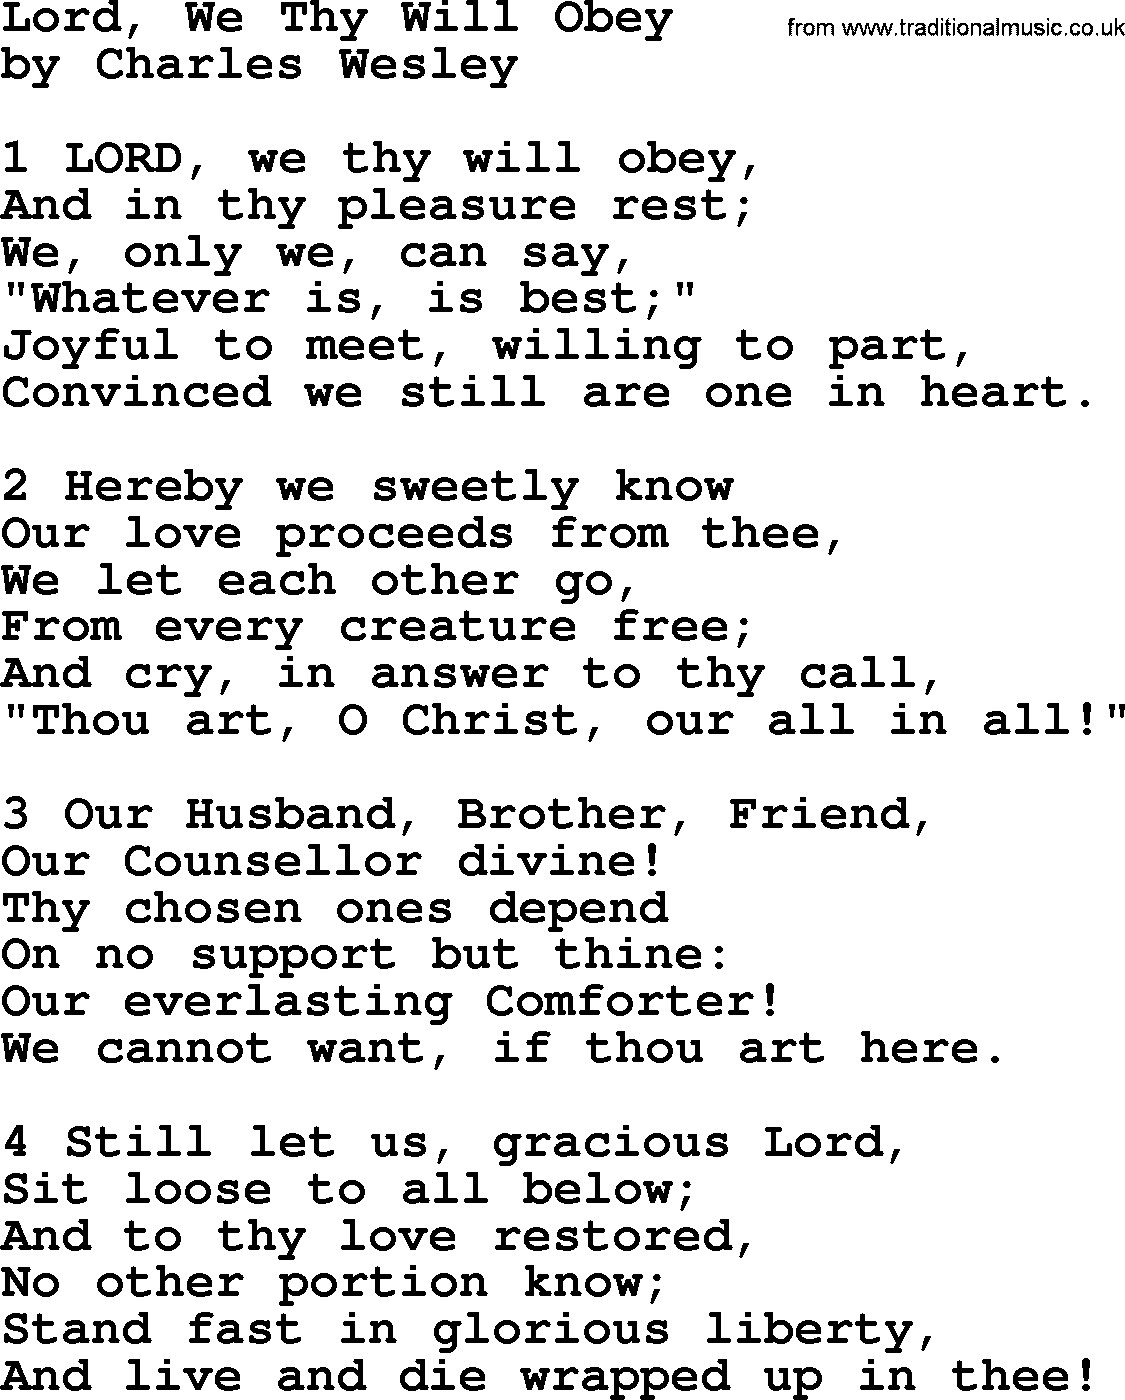 Charles Wesley hymn: Lord, We Thy Will Obey, lyrics